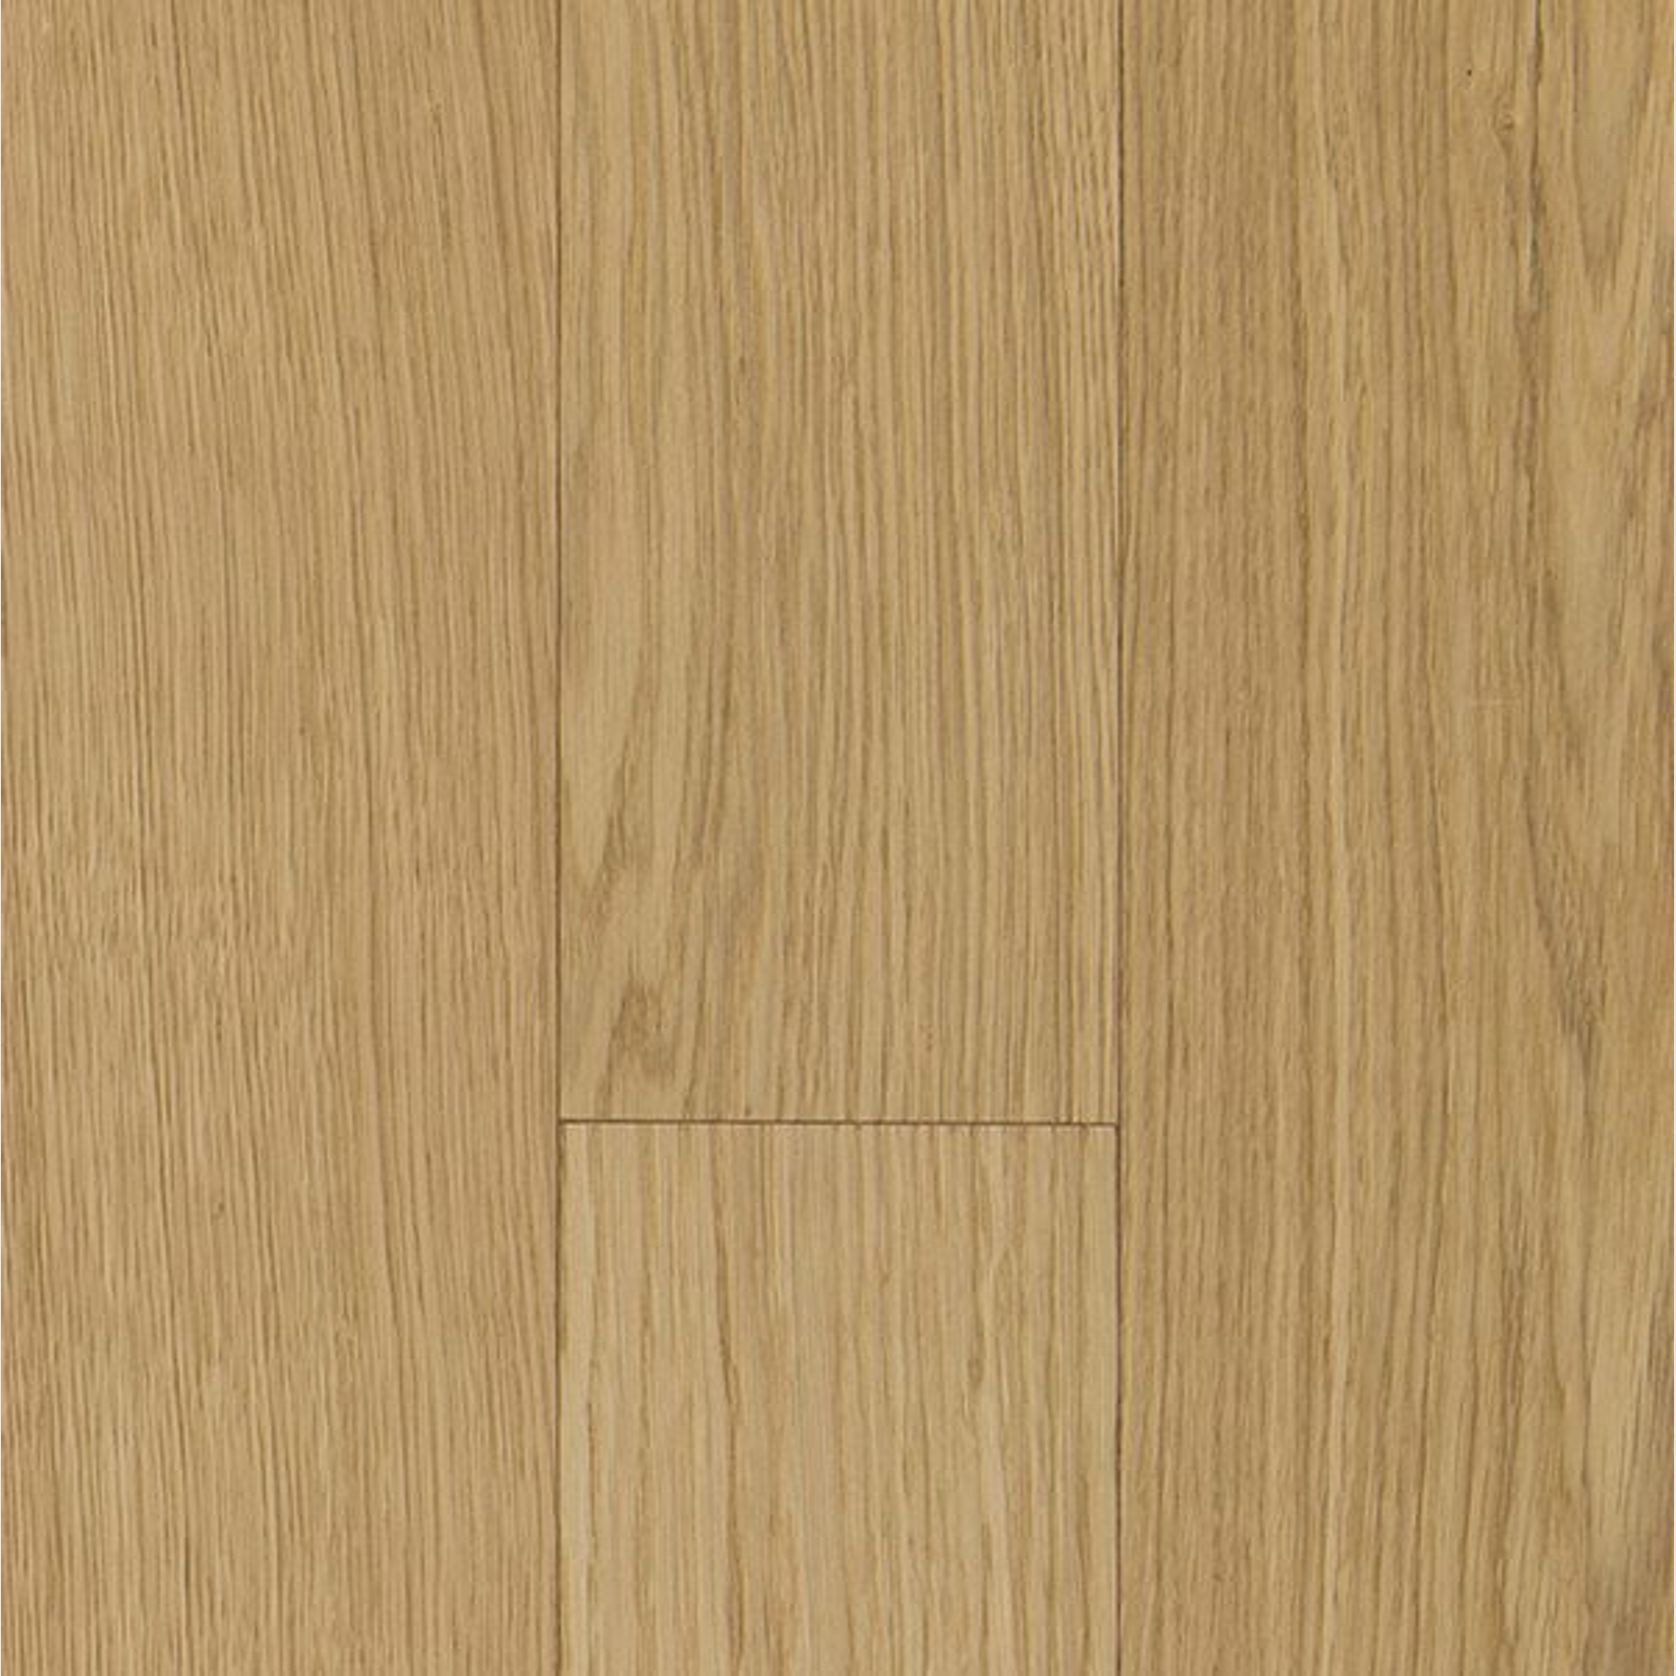 Natural Oak Parky Timber Flooring gallery detail image